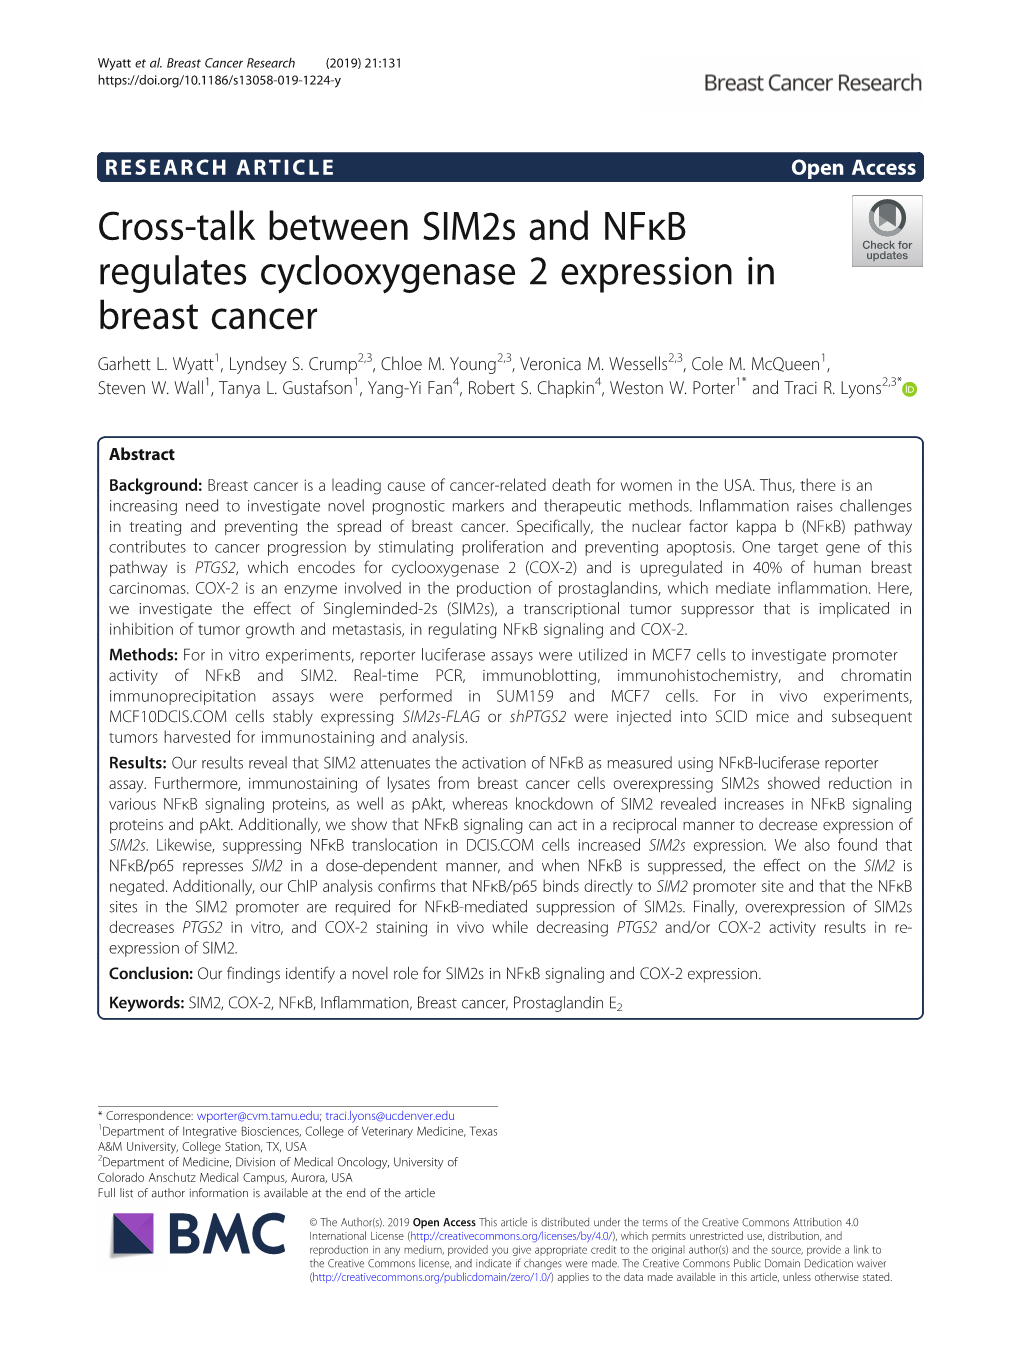 Cross-Talk Between Sim2s and Nfκb Regulates Cyclooxygenase 2 Expression in Breast Cancer Garhett L